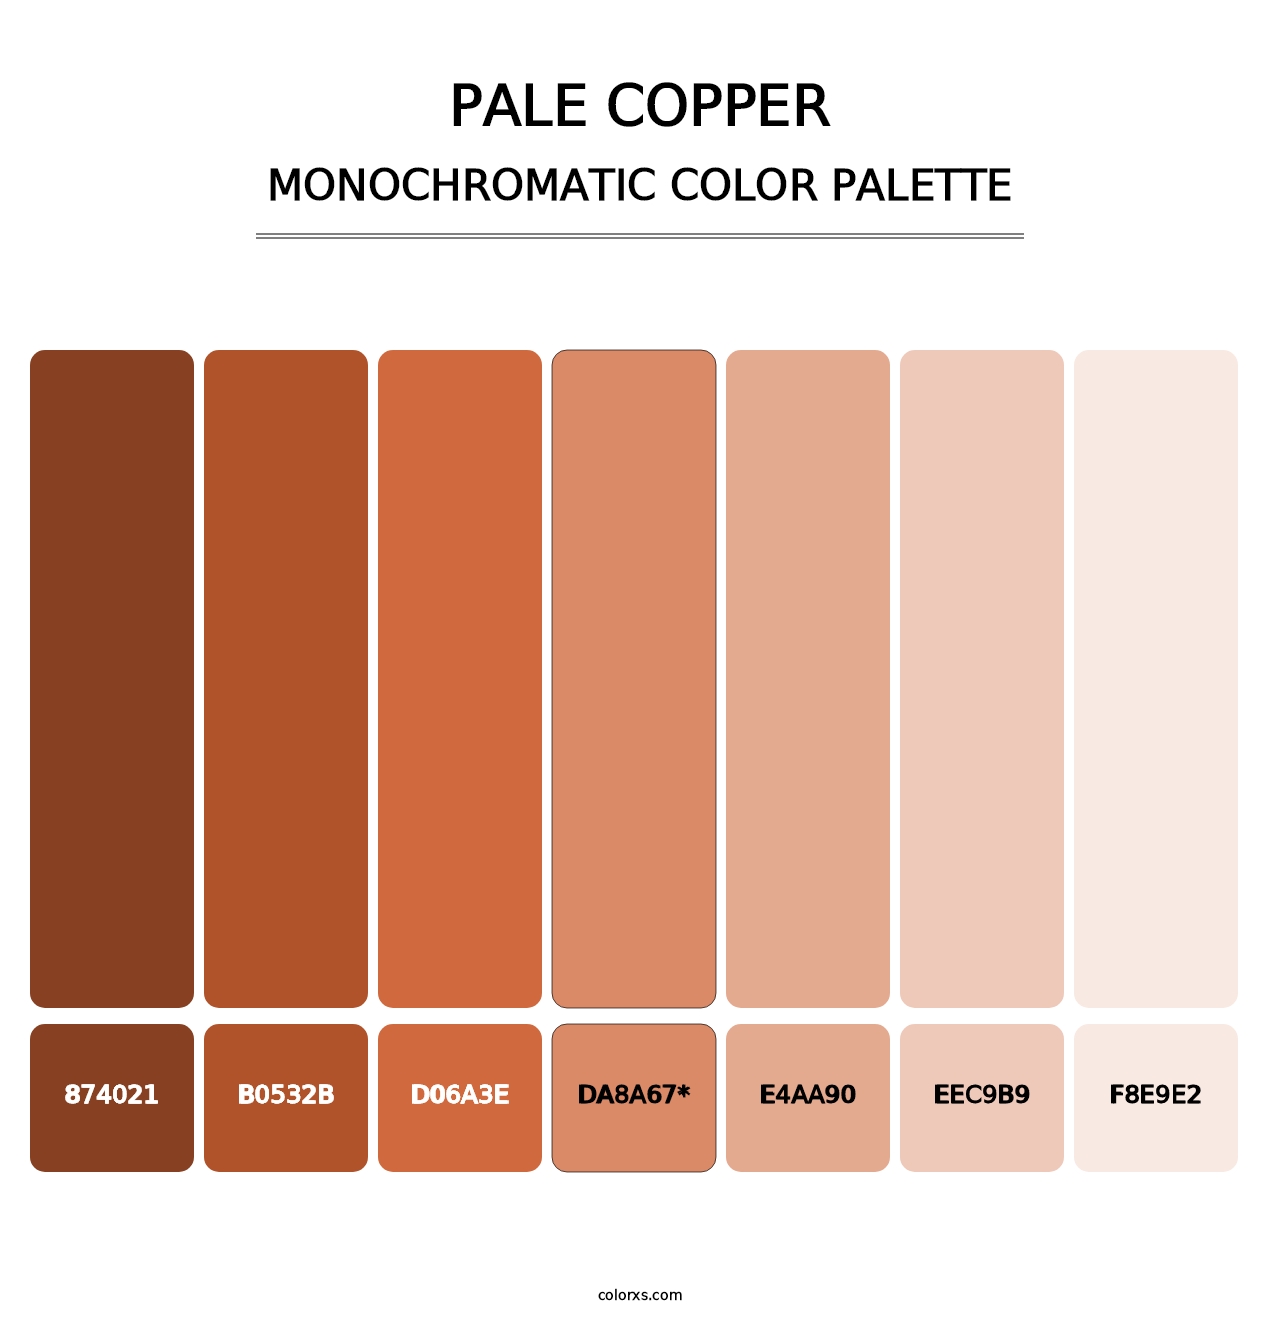 Pale Copper - Monochromatic Color Palette